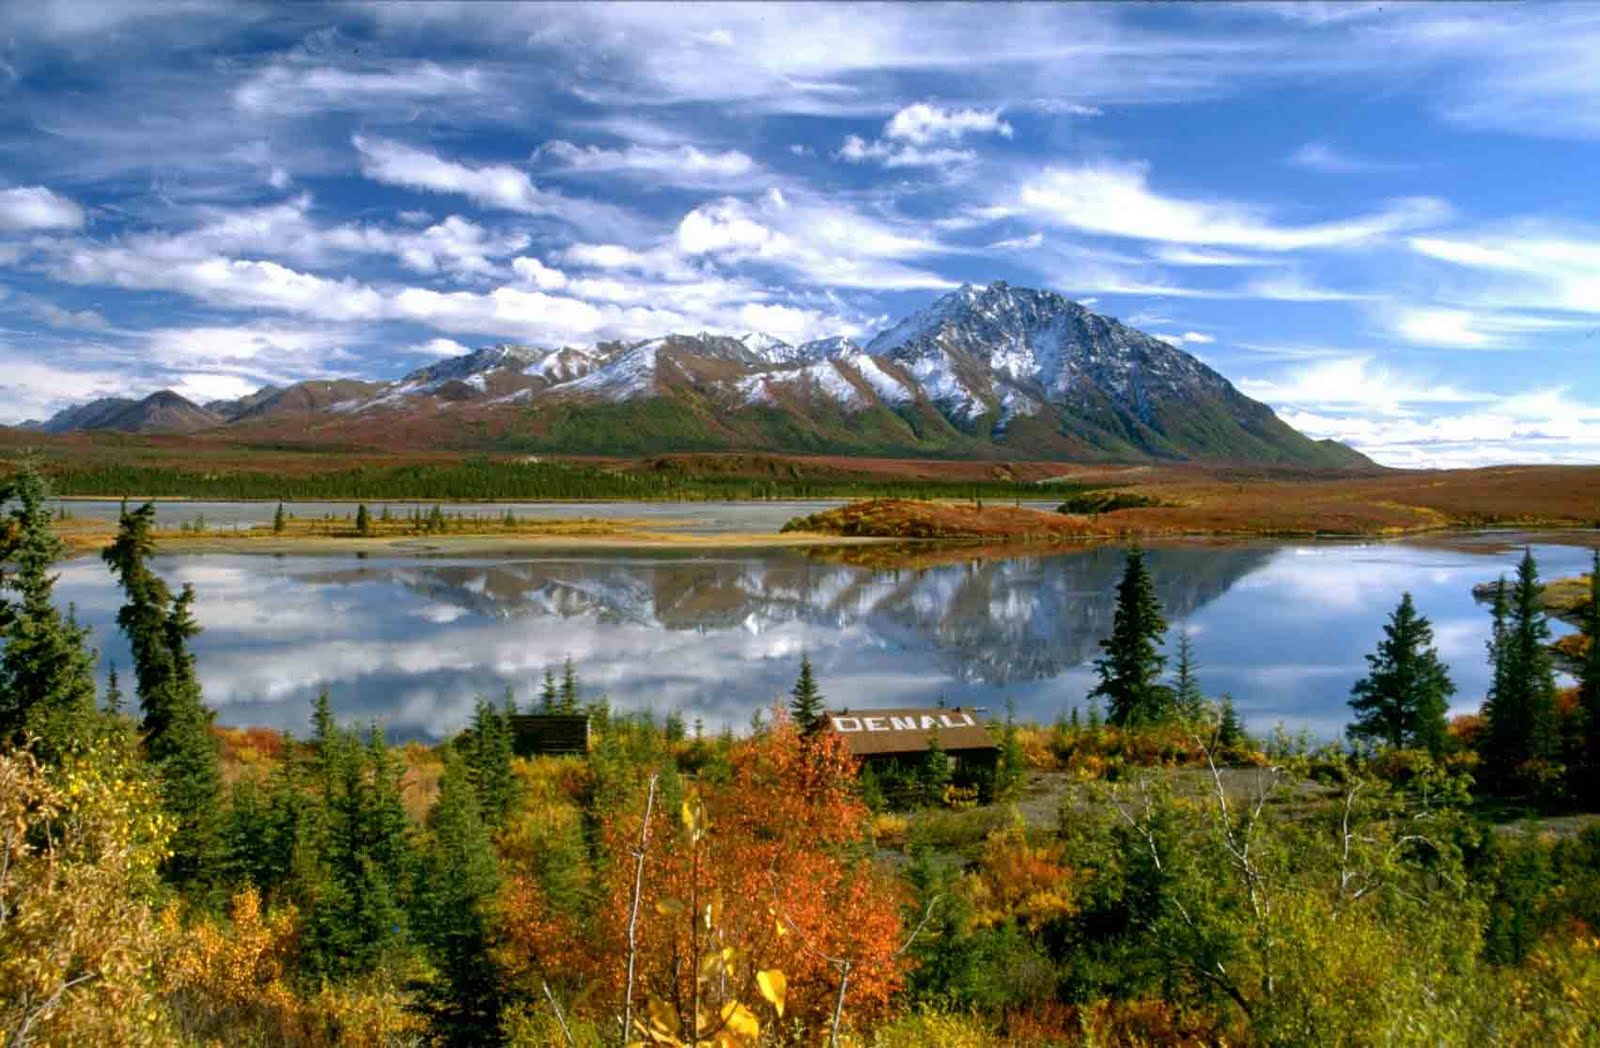 Margy S Musings Beautiful Photos Of Alaska